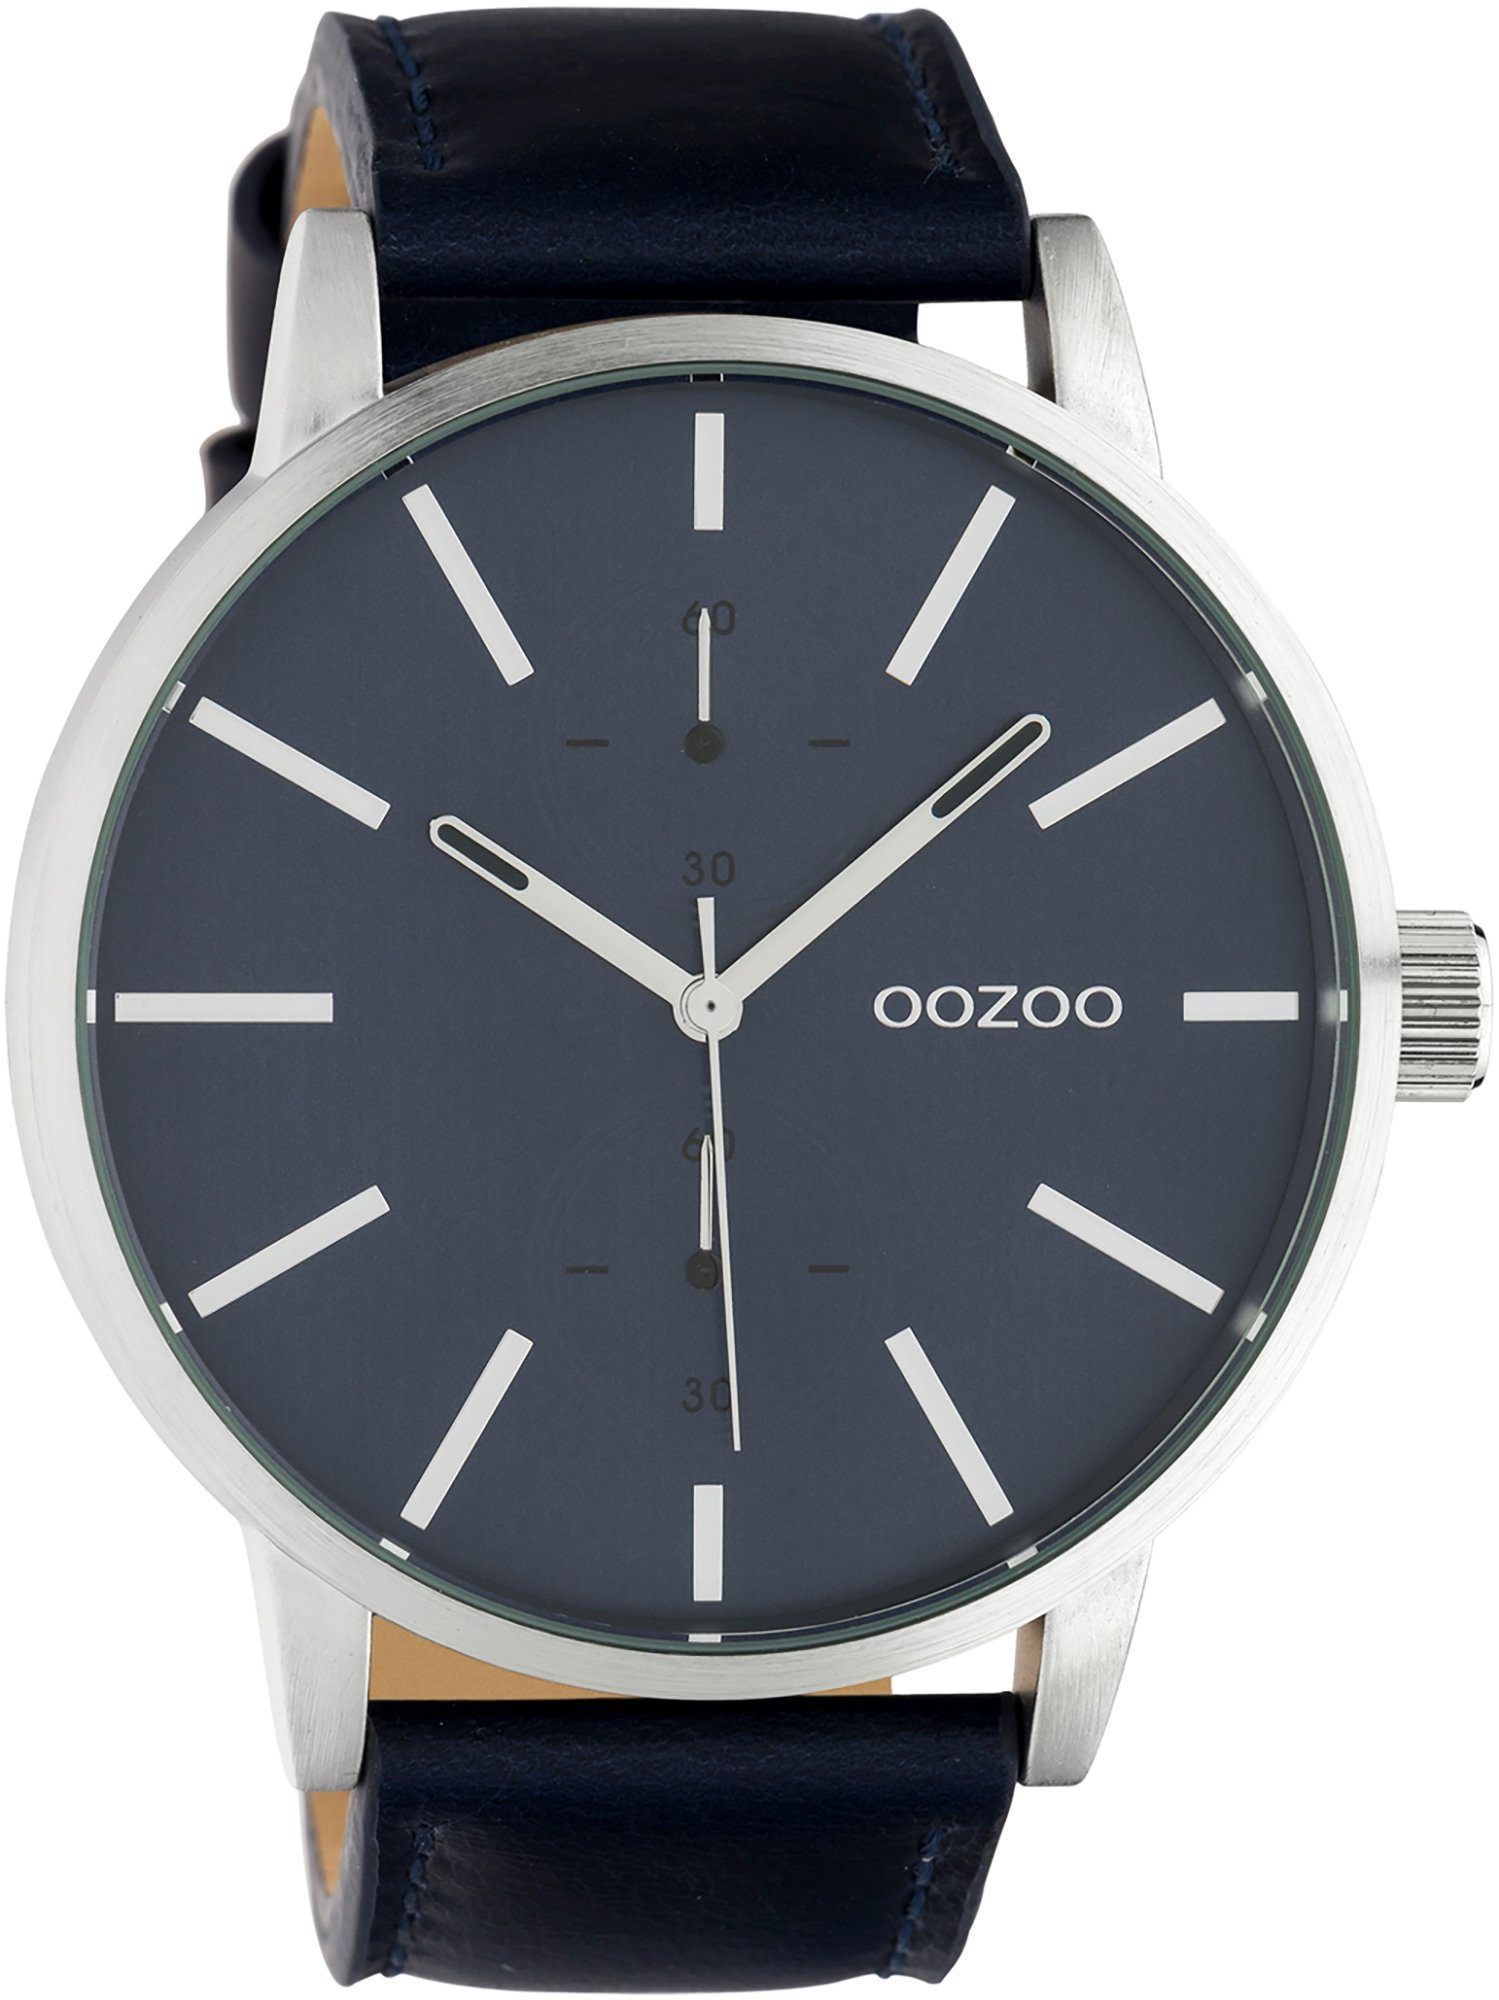 OOZOO Quarzuhr Oozoo Unisex Armbanduhr dunkelblau Analog, Damen, Herrenuhr rund, extra groß (ca 50mm) Lederarmband, FashionStyle